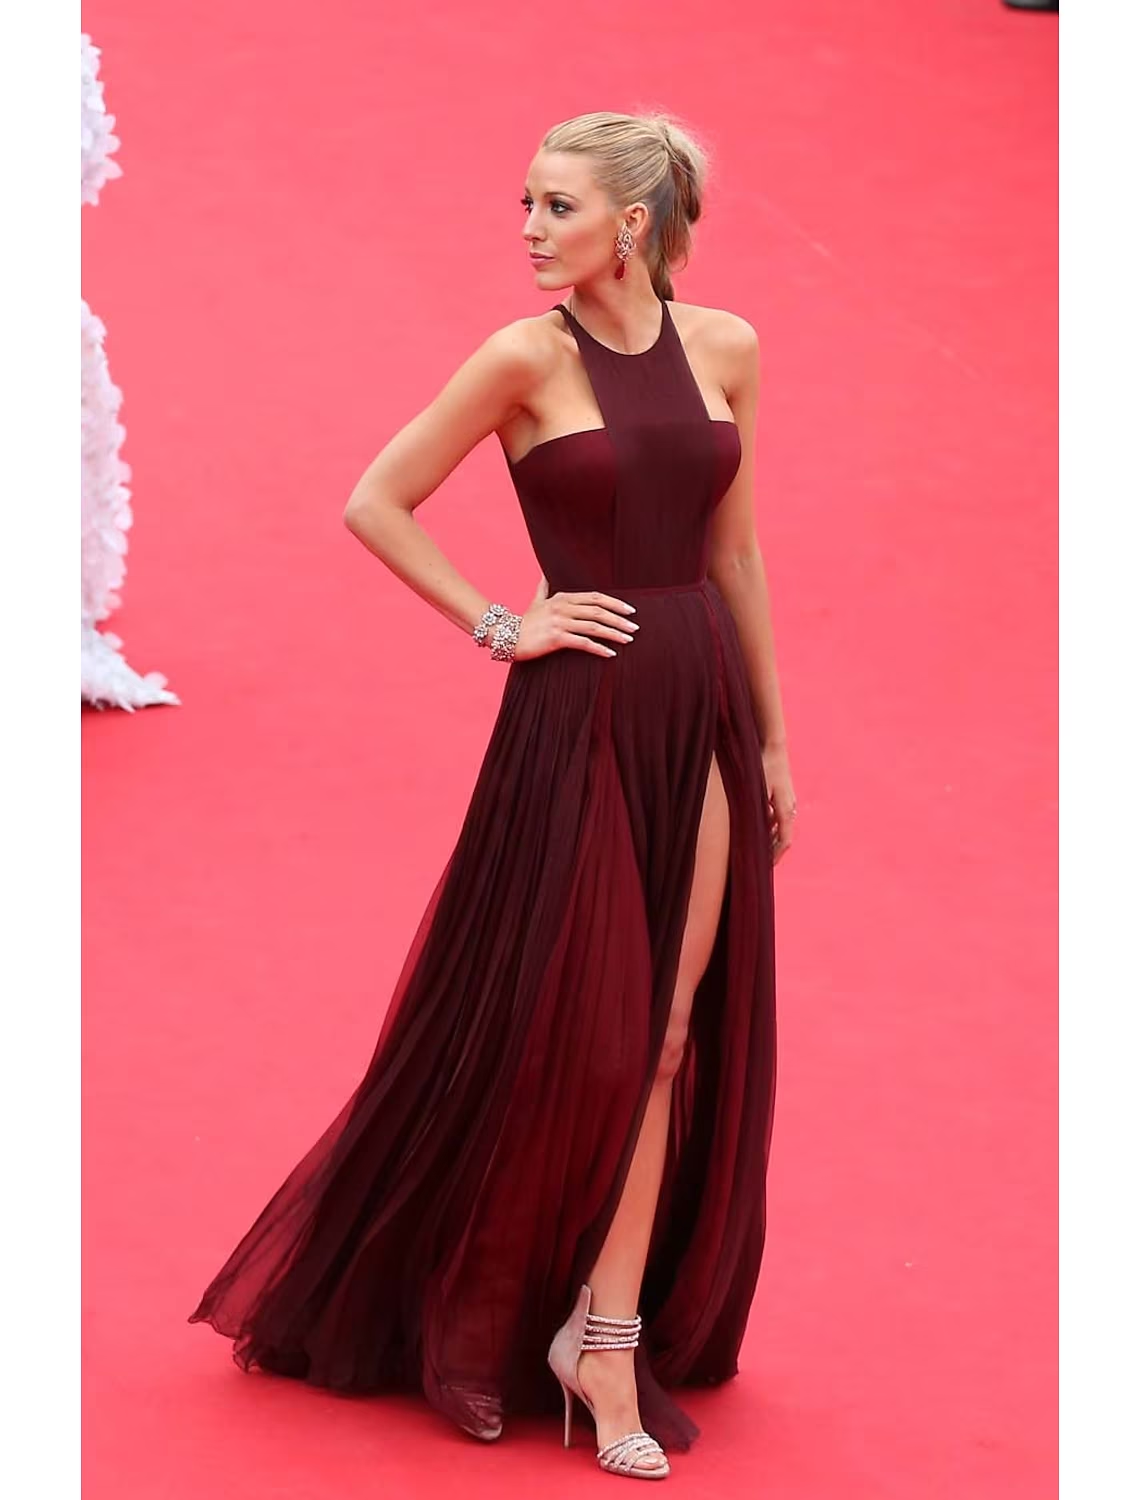 Blake Lively Burgundy Celebrity Prom Dress Cannes Film Festival 2014 Red Carpet